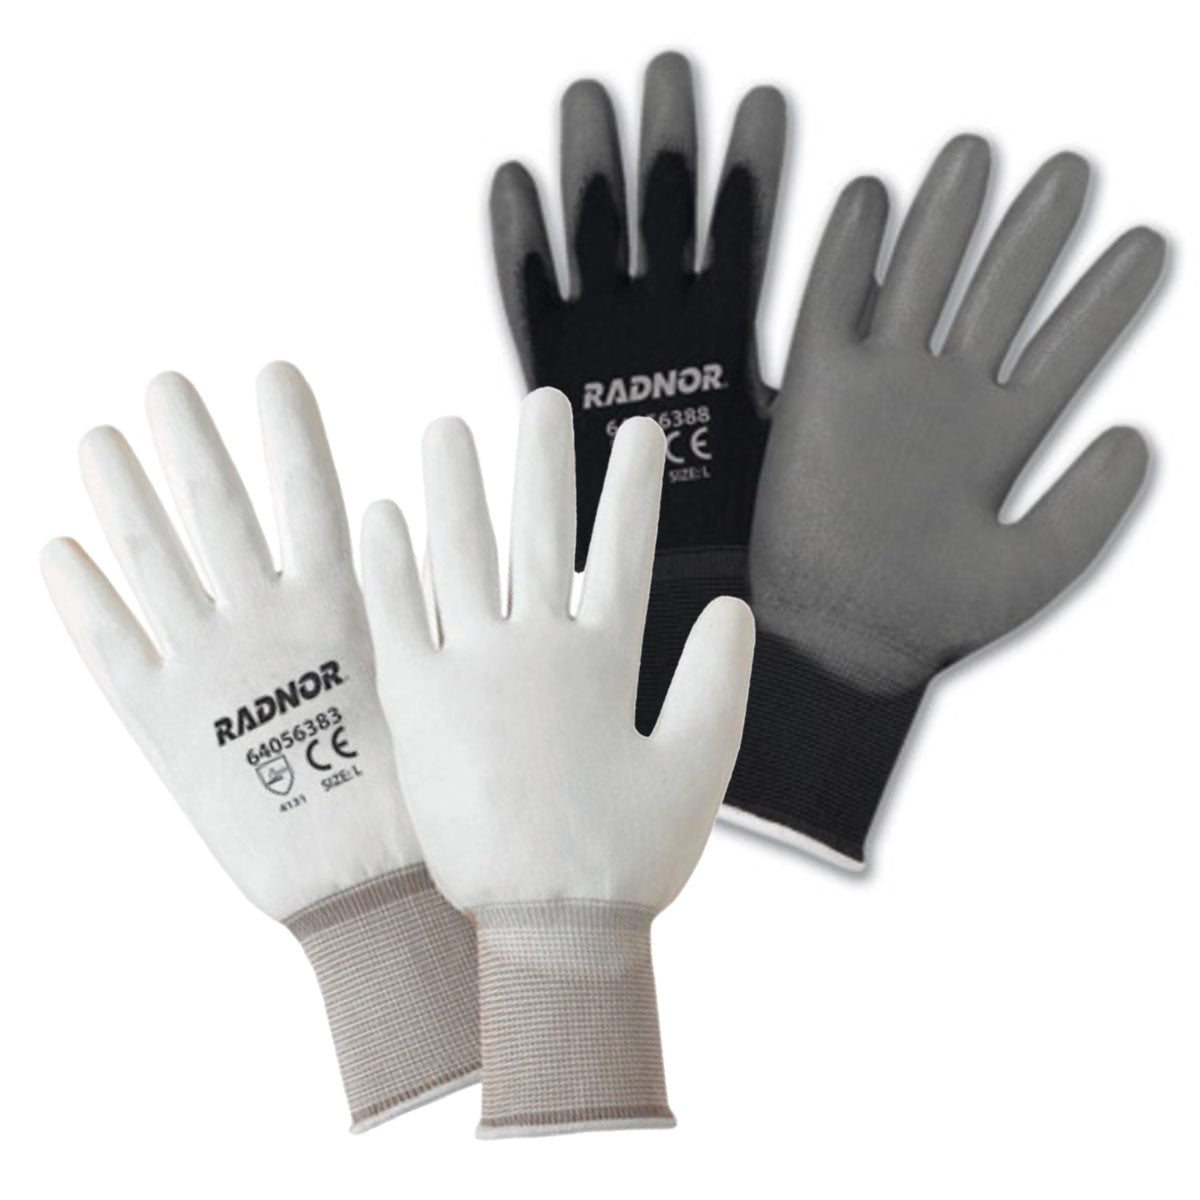  RADNOR® 15 Gauge Polyurethane Palm And Finger Coated Work Gloves Work Safety Protective Gear